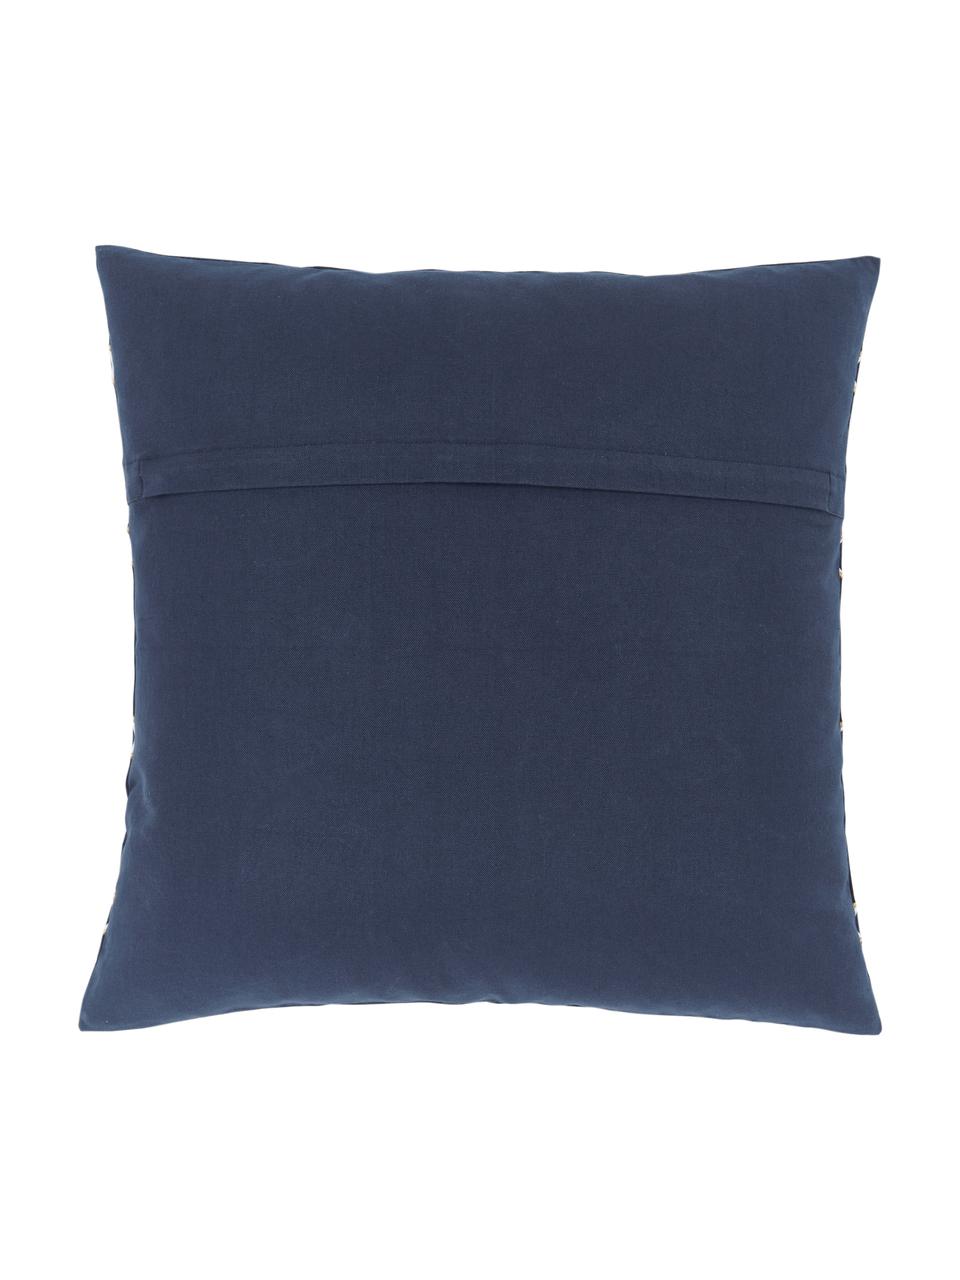 Poszewka na poduszkę Observe, 100% bawełna, Niebieski, S 50 x D 50 cm